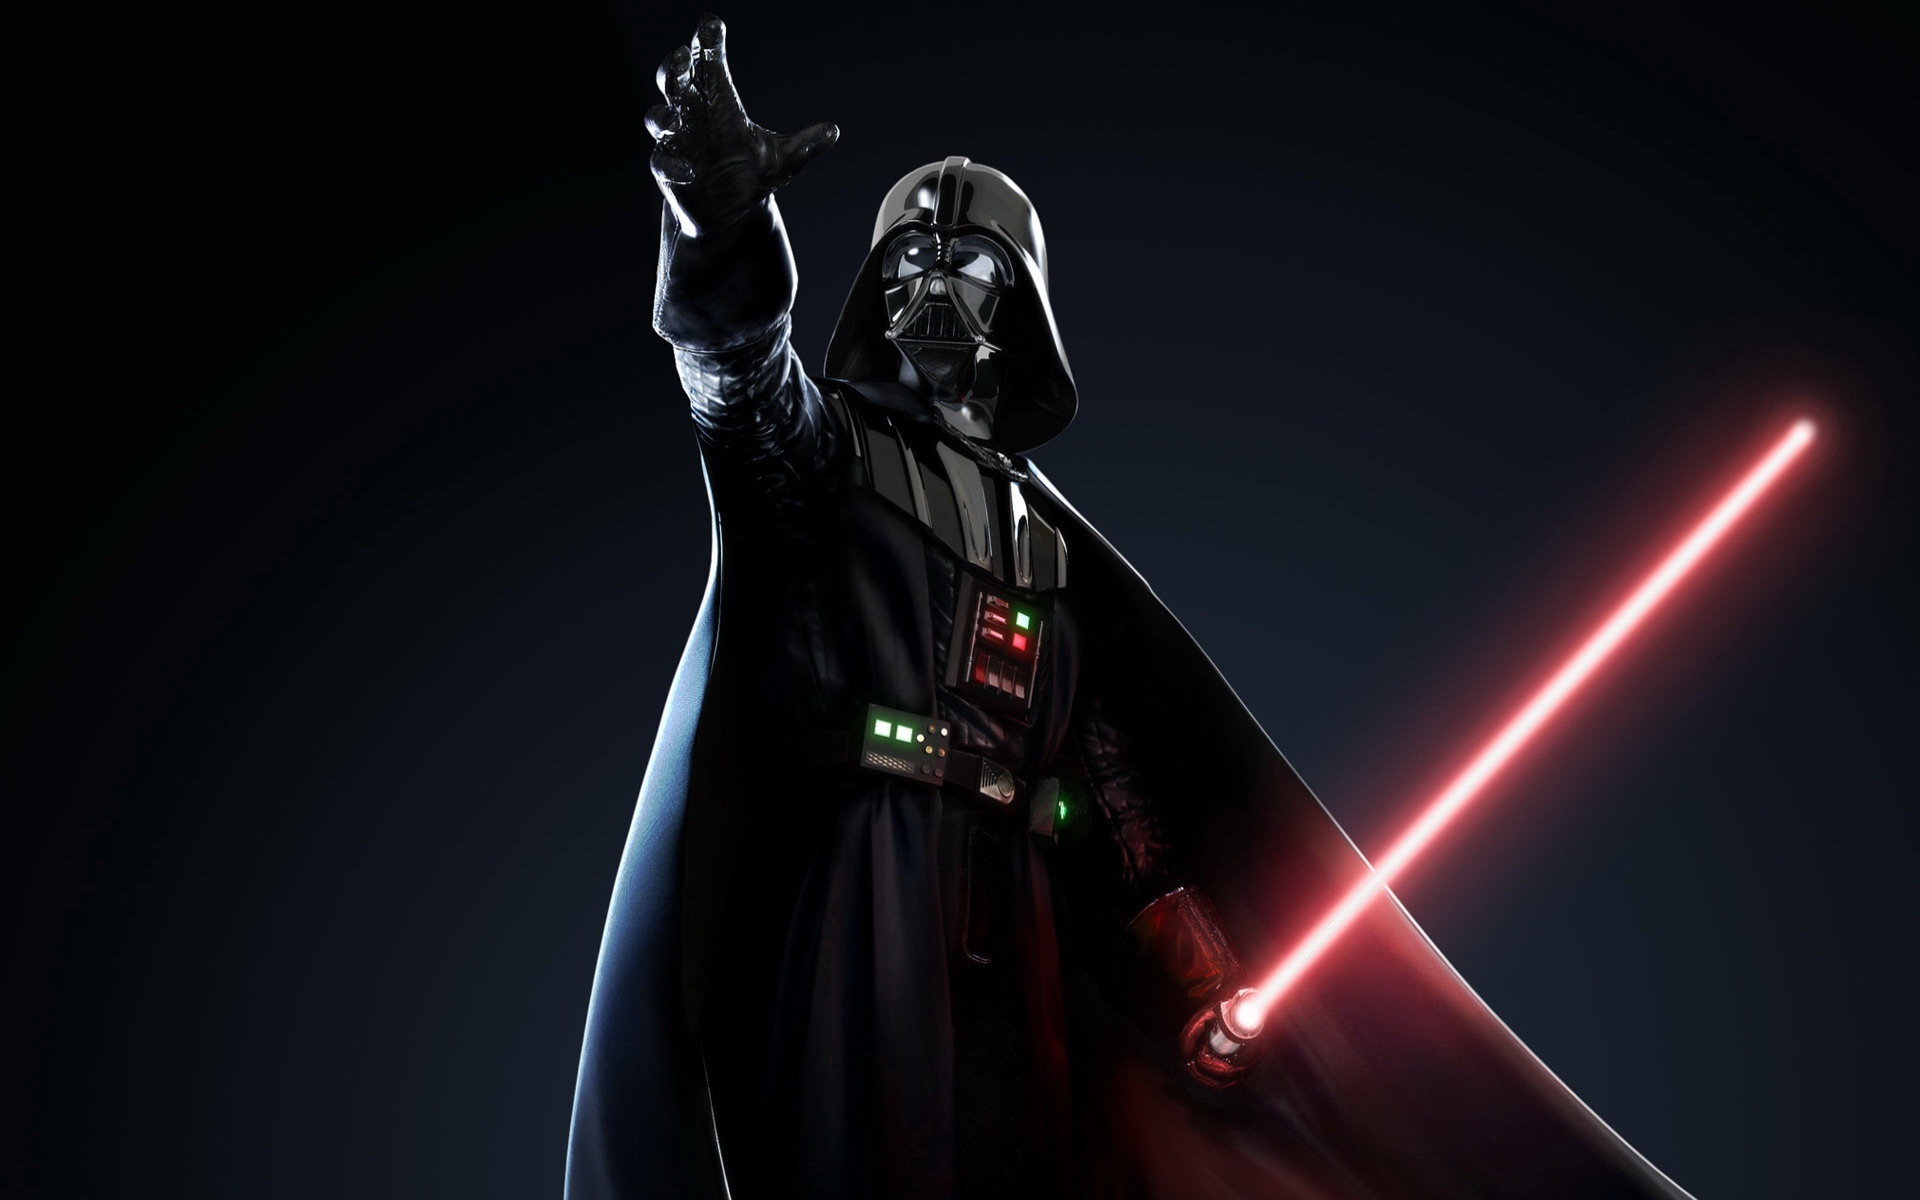 Darth Vader wielding a lightsaber